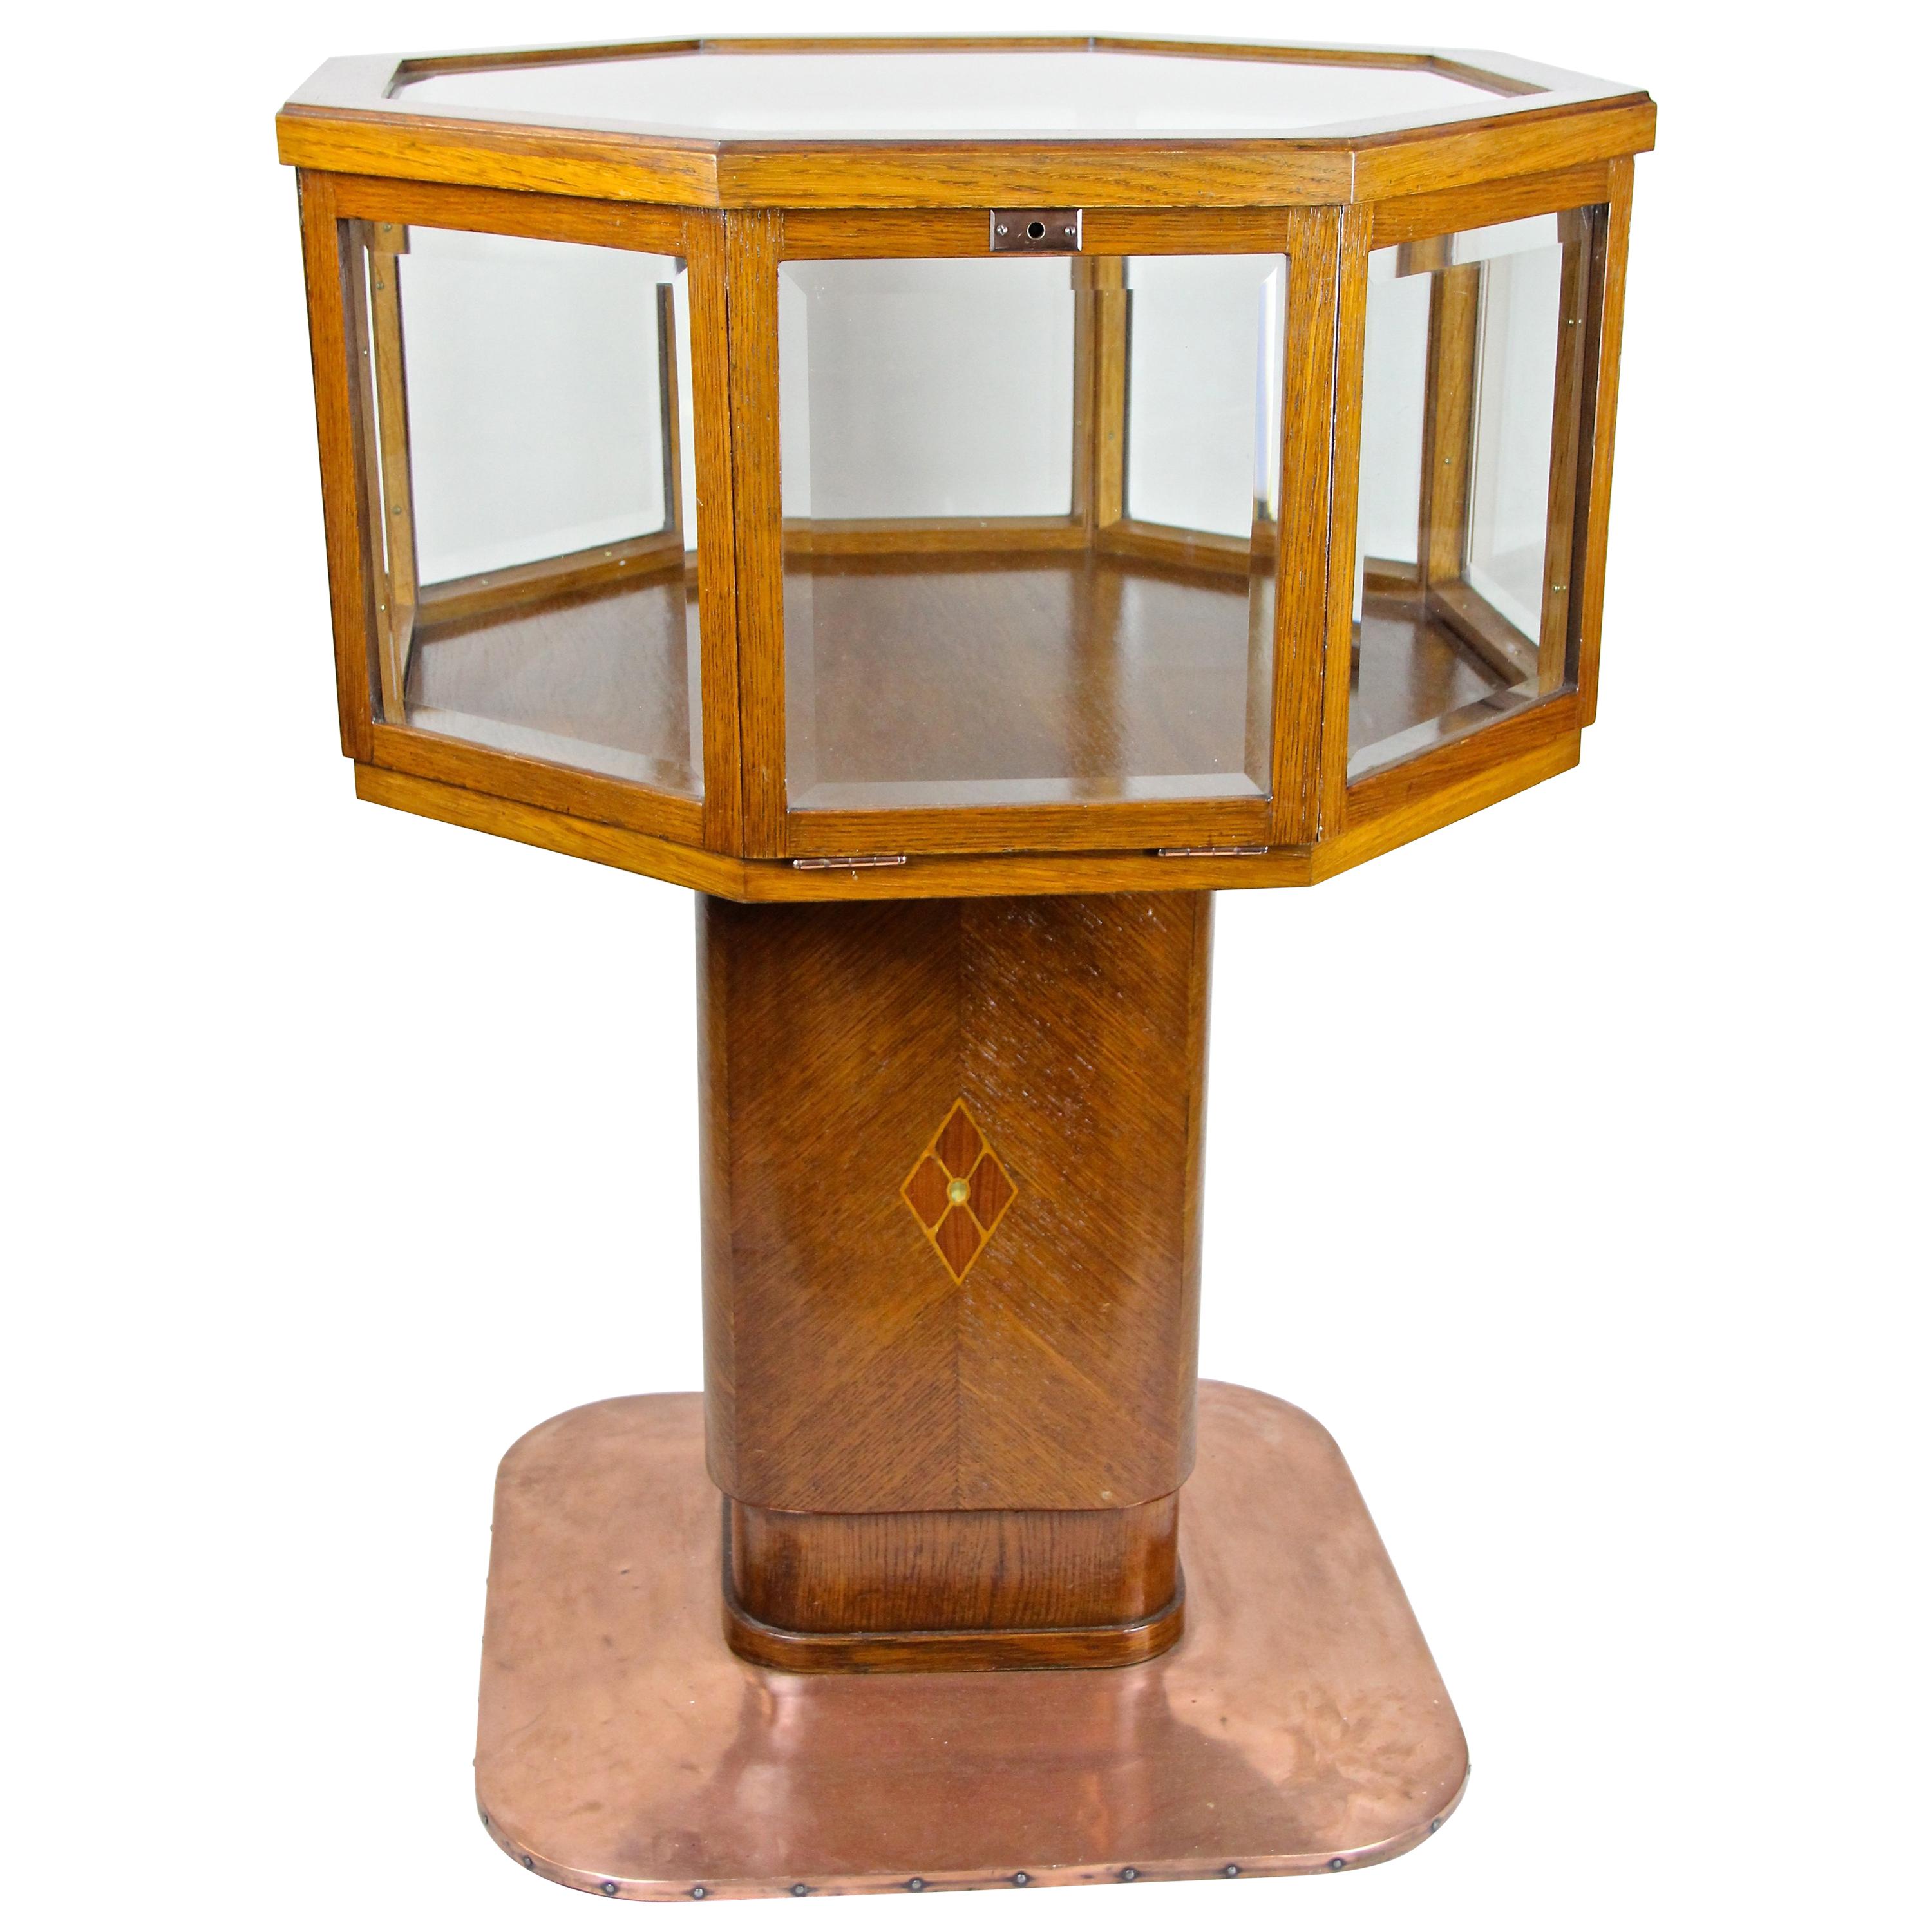 Art Nouveau Vitrine Table/ Display Table, Austria circa 1900